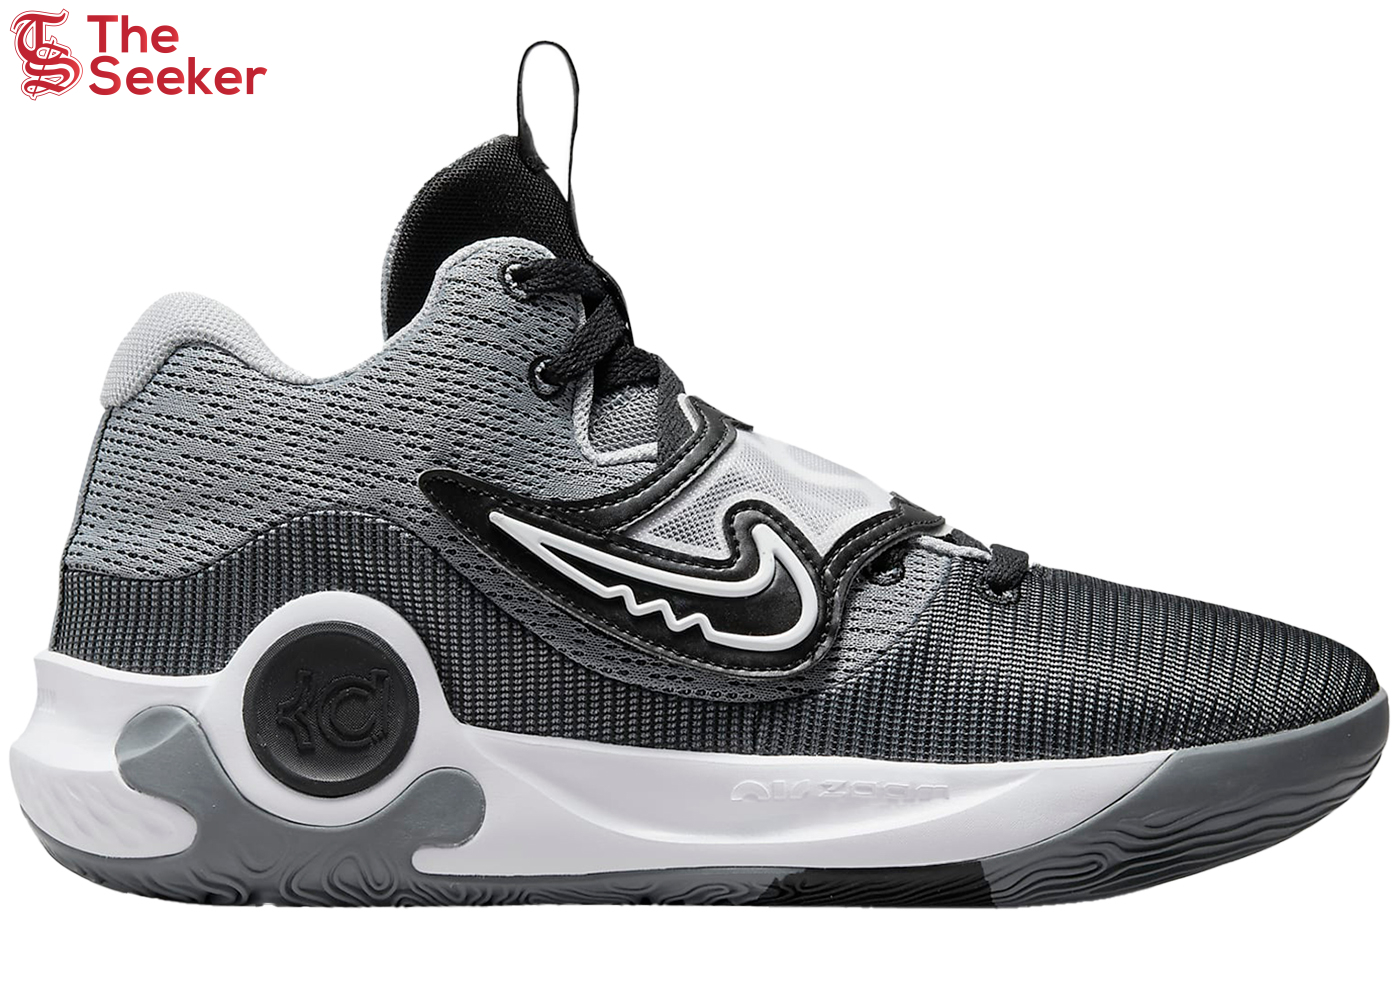 Nike KD Trey 5 X Cool Grey Black